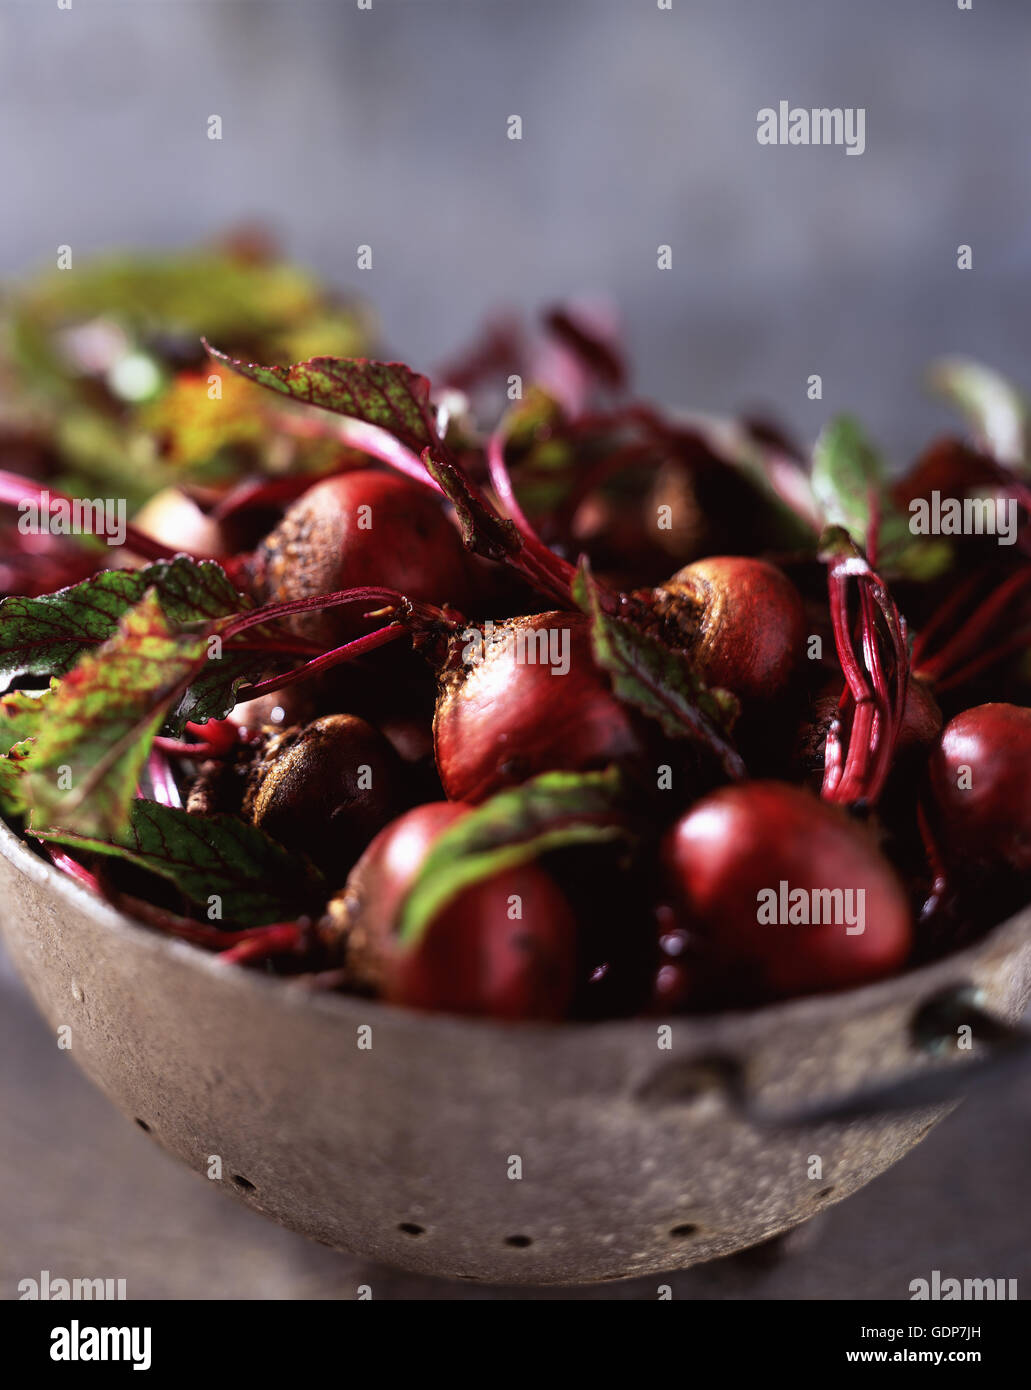 Lebensmittel, Gemüse, rohe rote Beete mit Blättern in Sieb Stockfoto